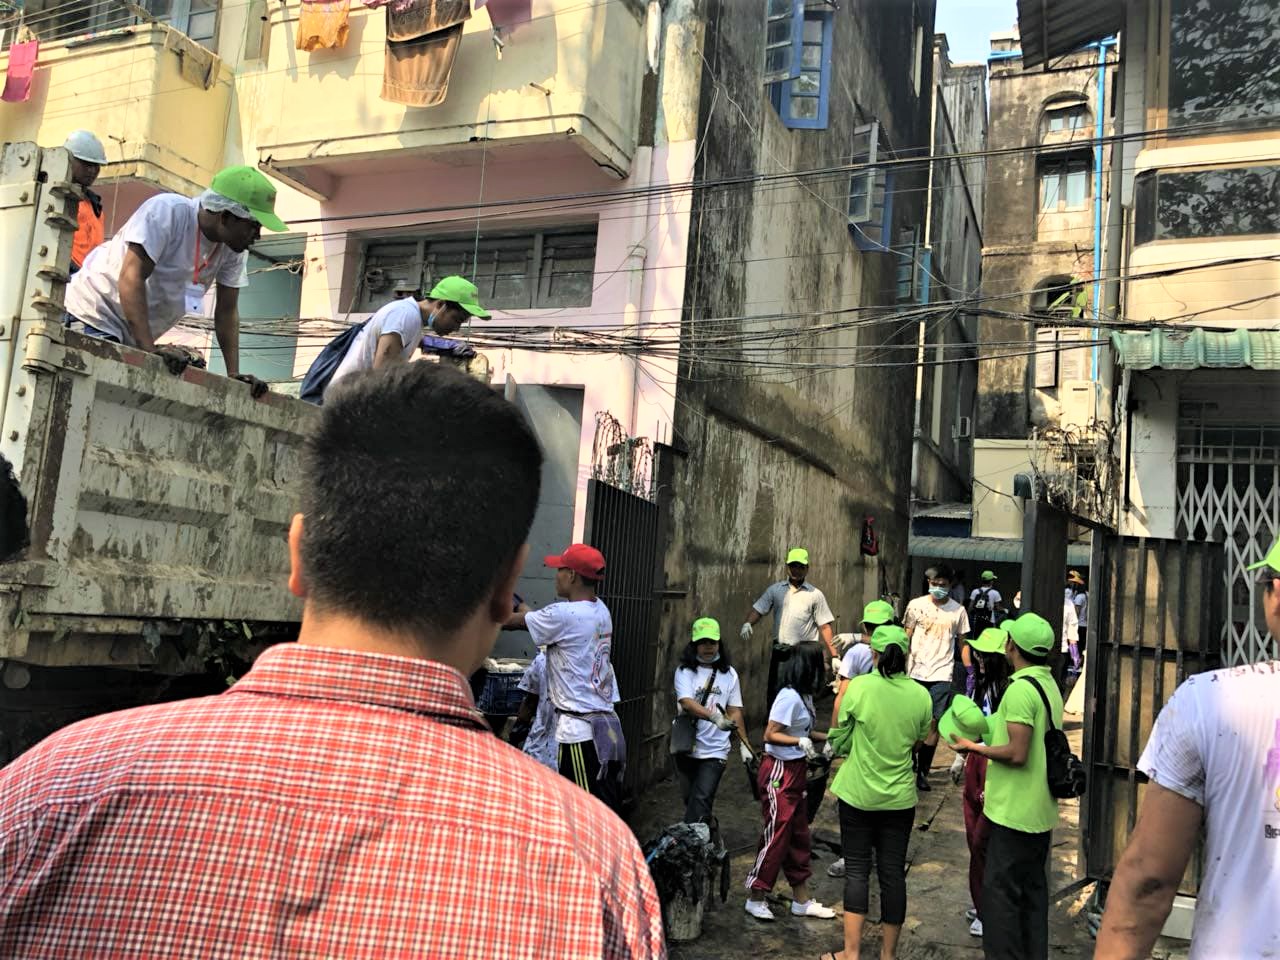 Yangon Cleanup Challenge မှာပါဝင်ခဲ့သူများအတွက် Jasmine သောက်ရည်သန့်မှ ရေသန့်ဘူးများ အခမဲ့ ပေး၀ေခဲ့ပါသည်။